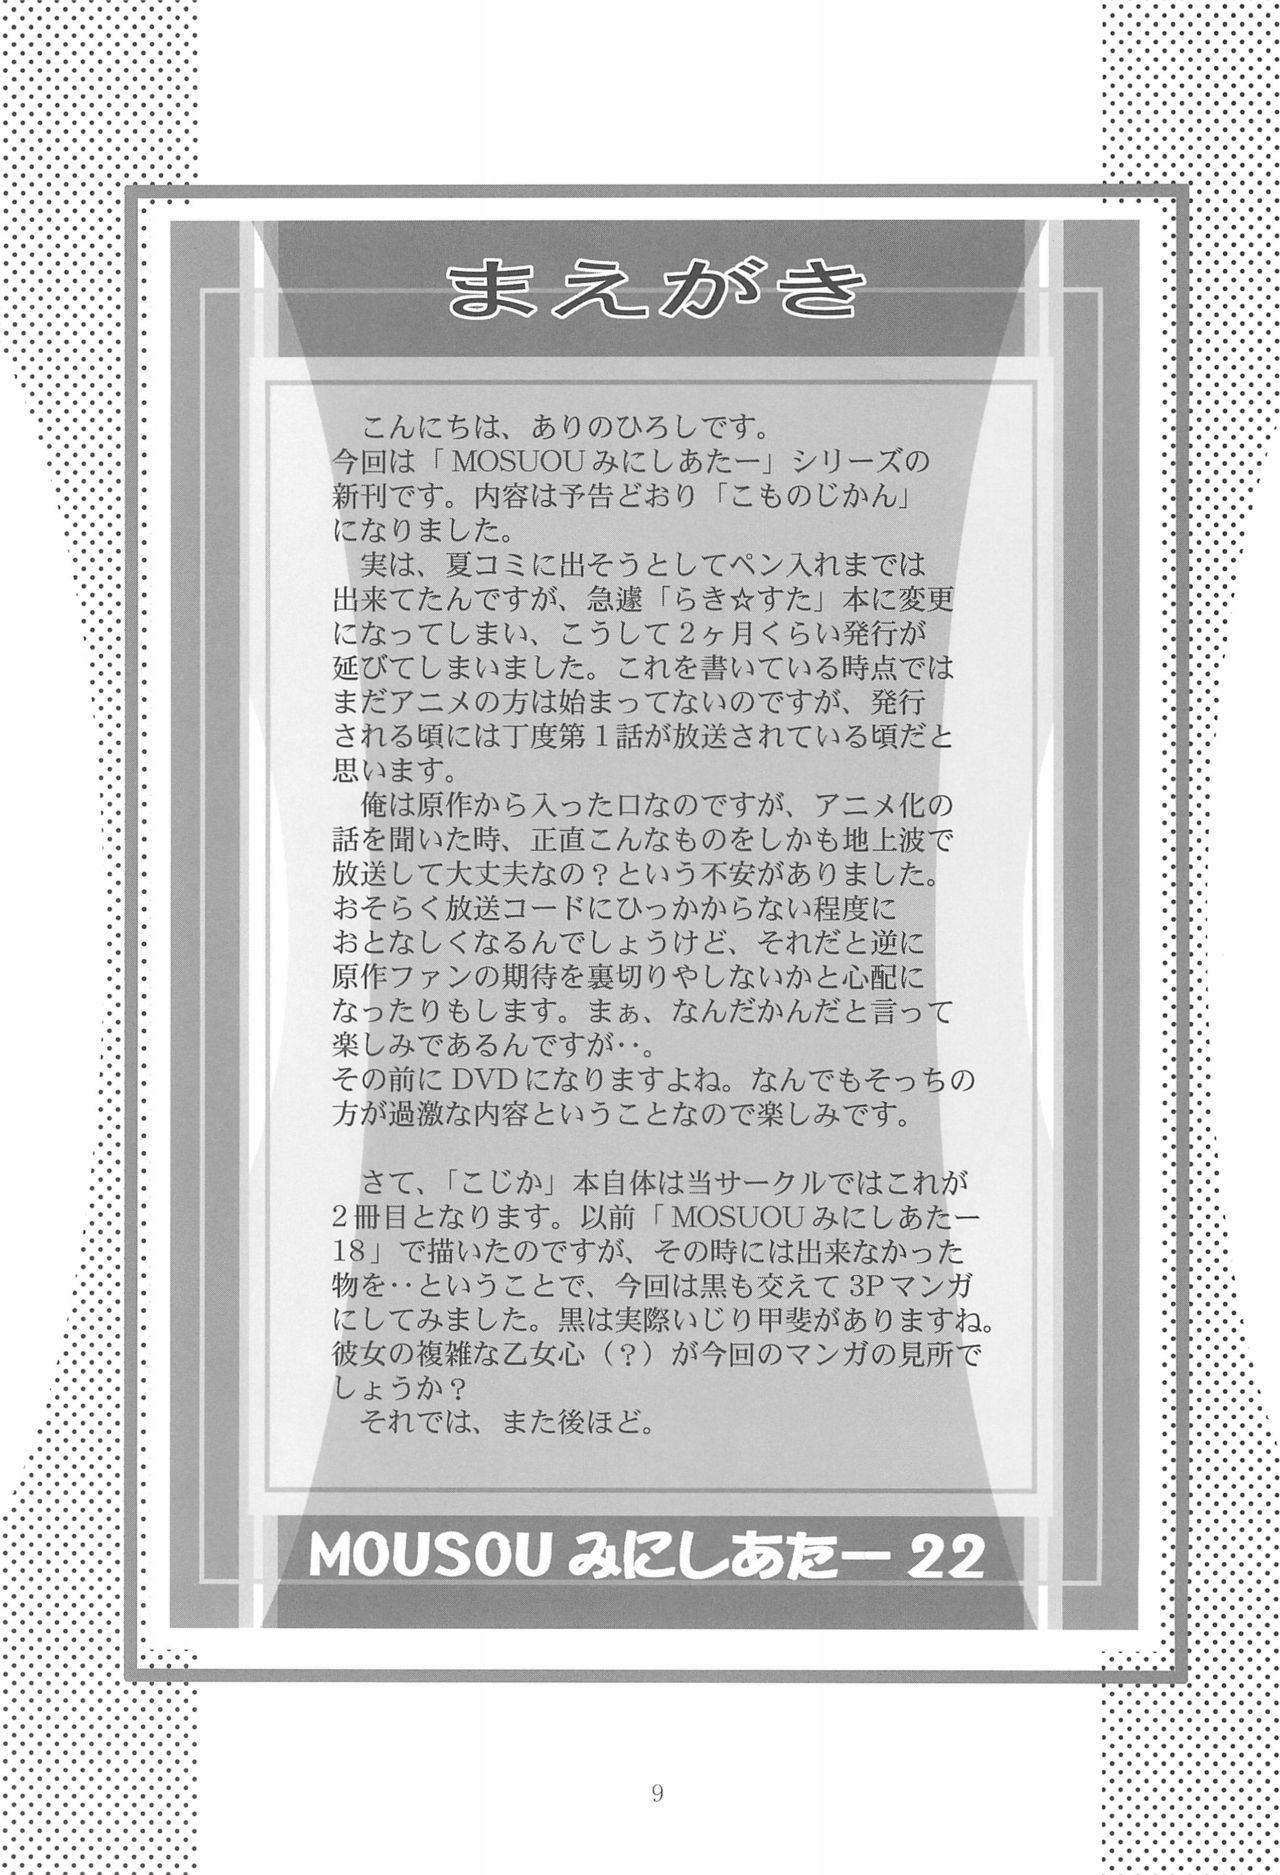 MOUSOU Mini Theater 22 8